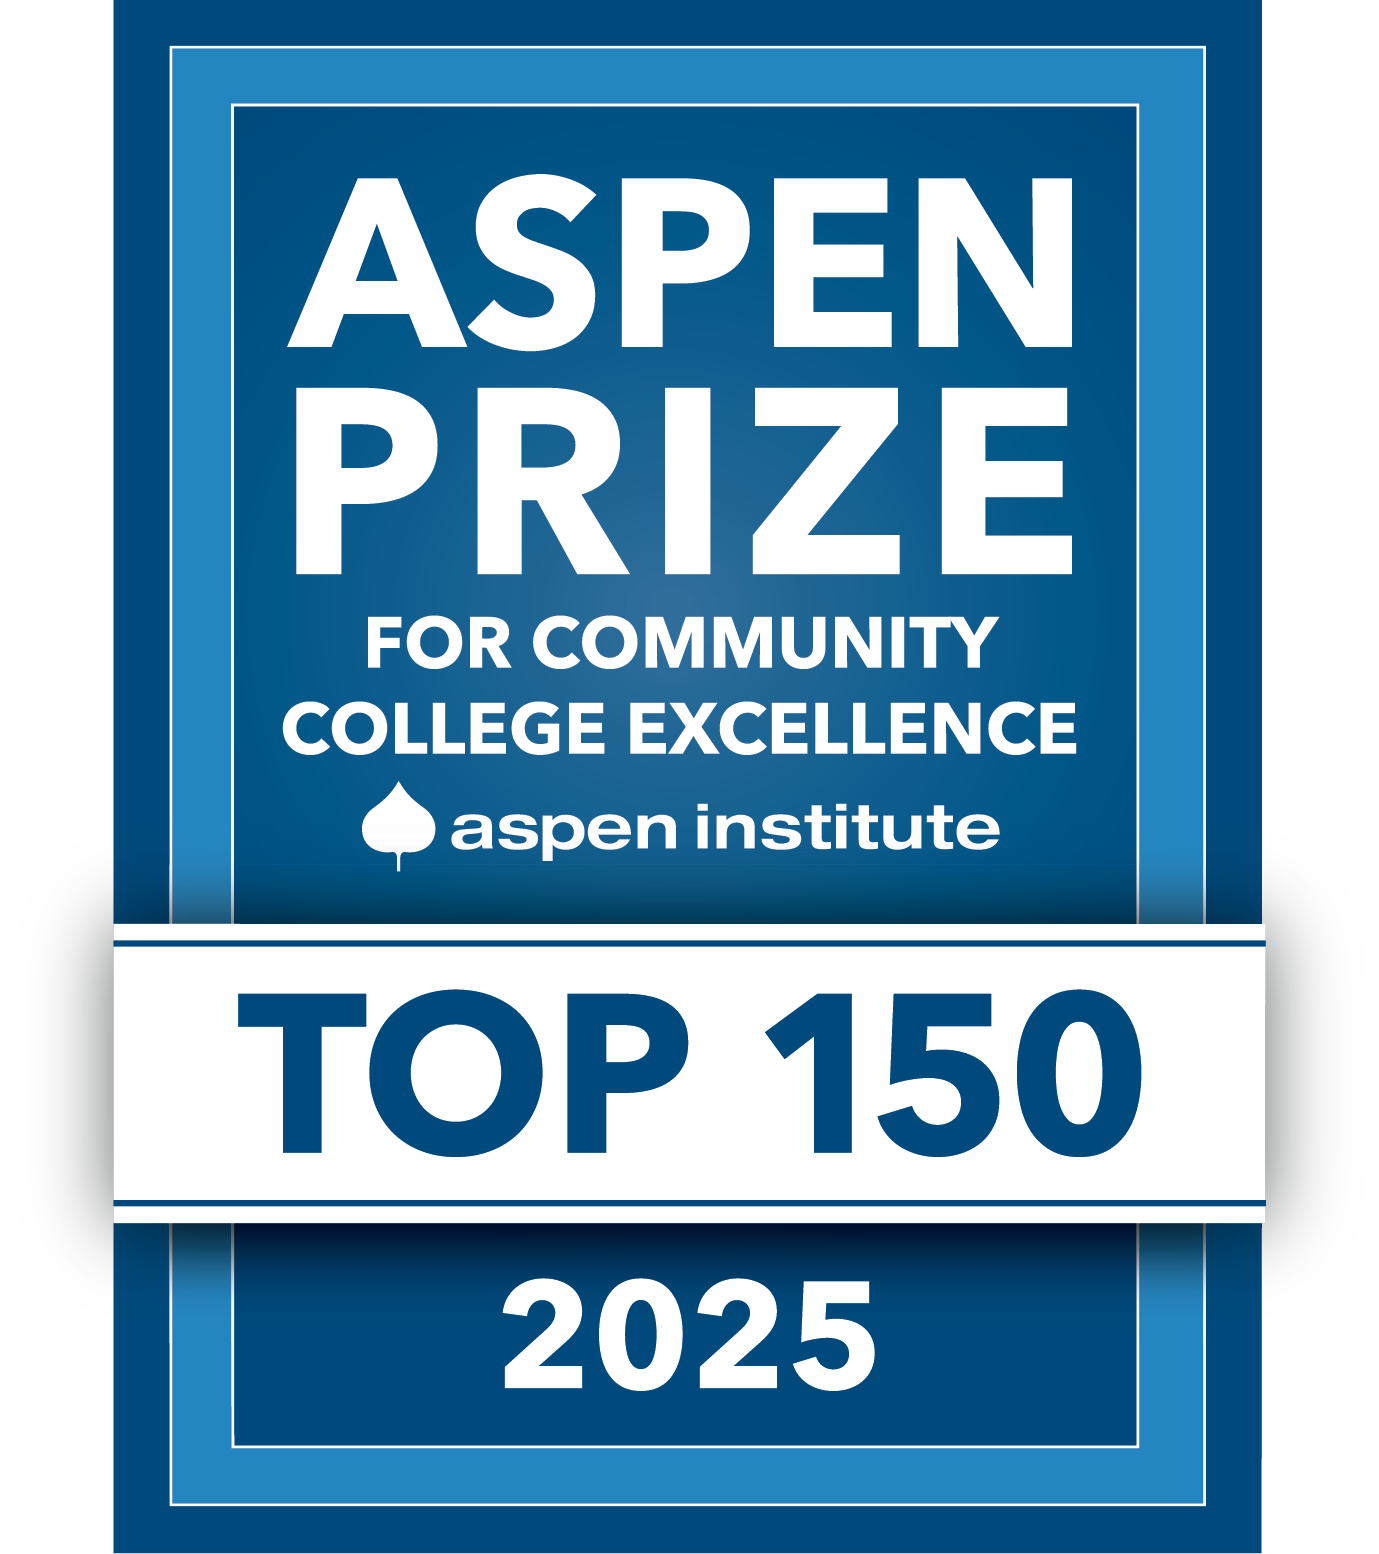 Aspen Prize Top 150 – 2025